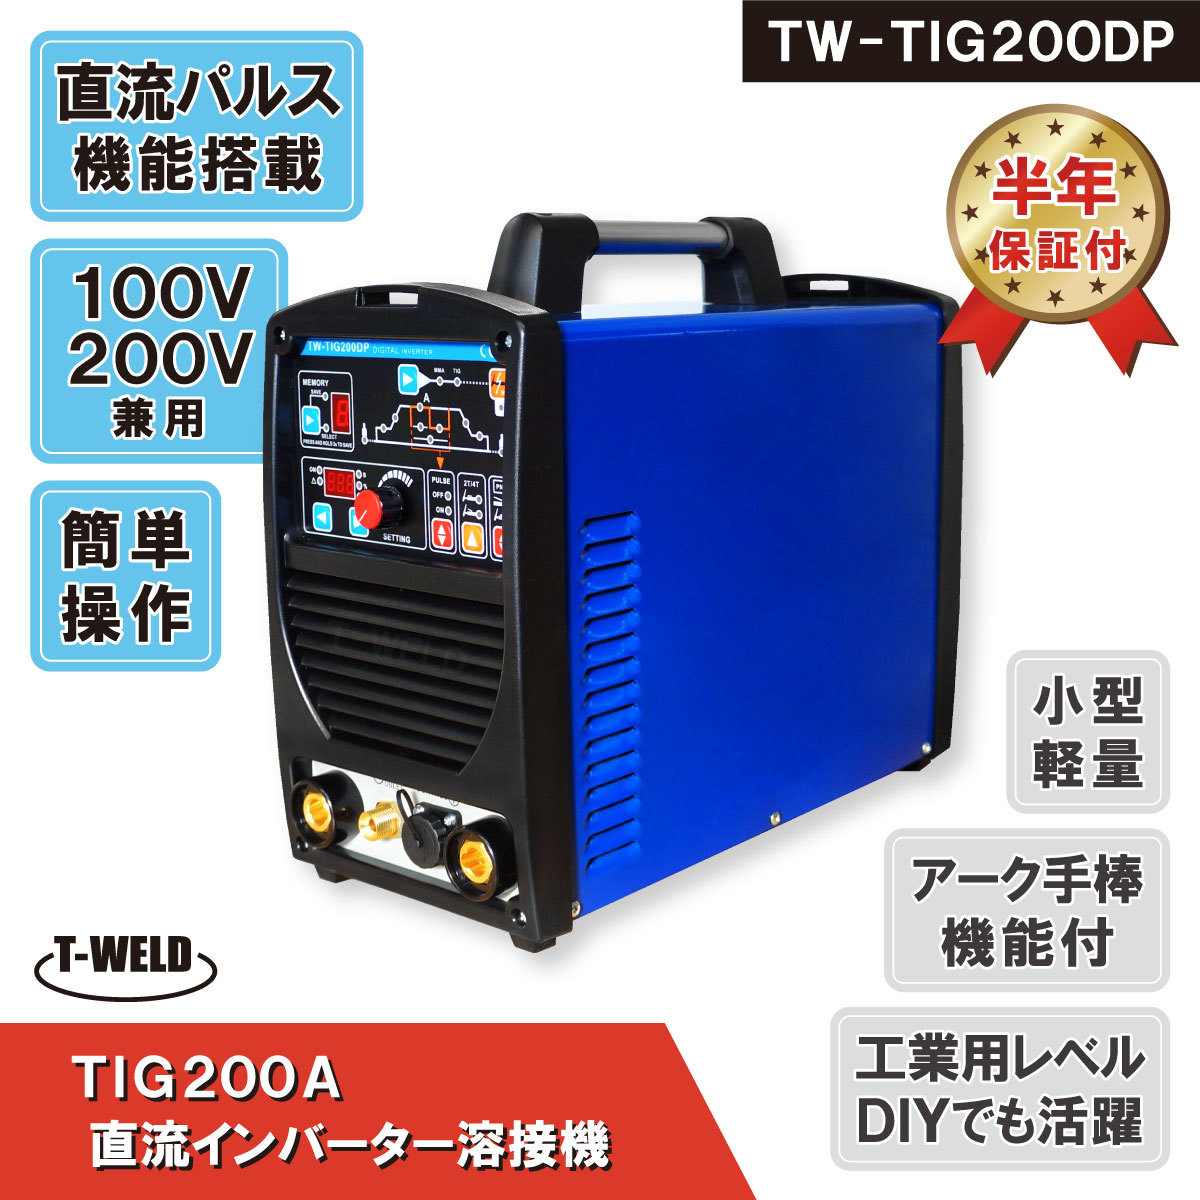 TIG 200A 直流 インバーター溶接機 TW-TIG200DP 100V 200V 兼用 軽量 半年間保証付き